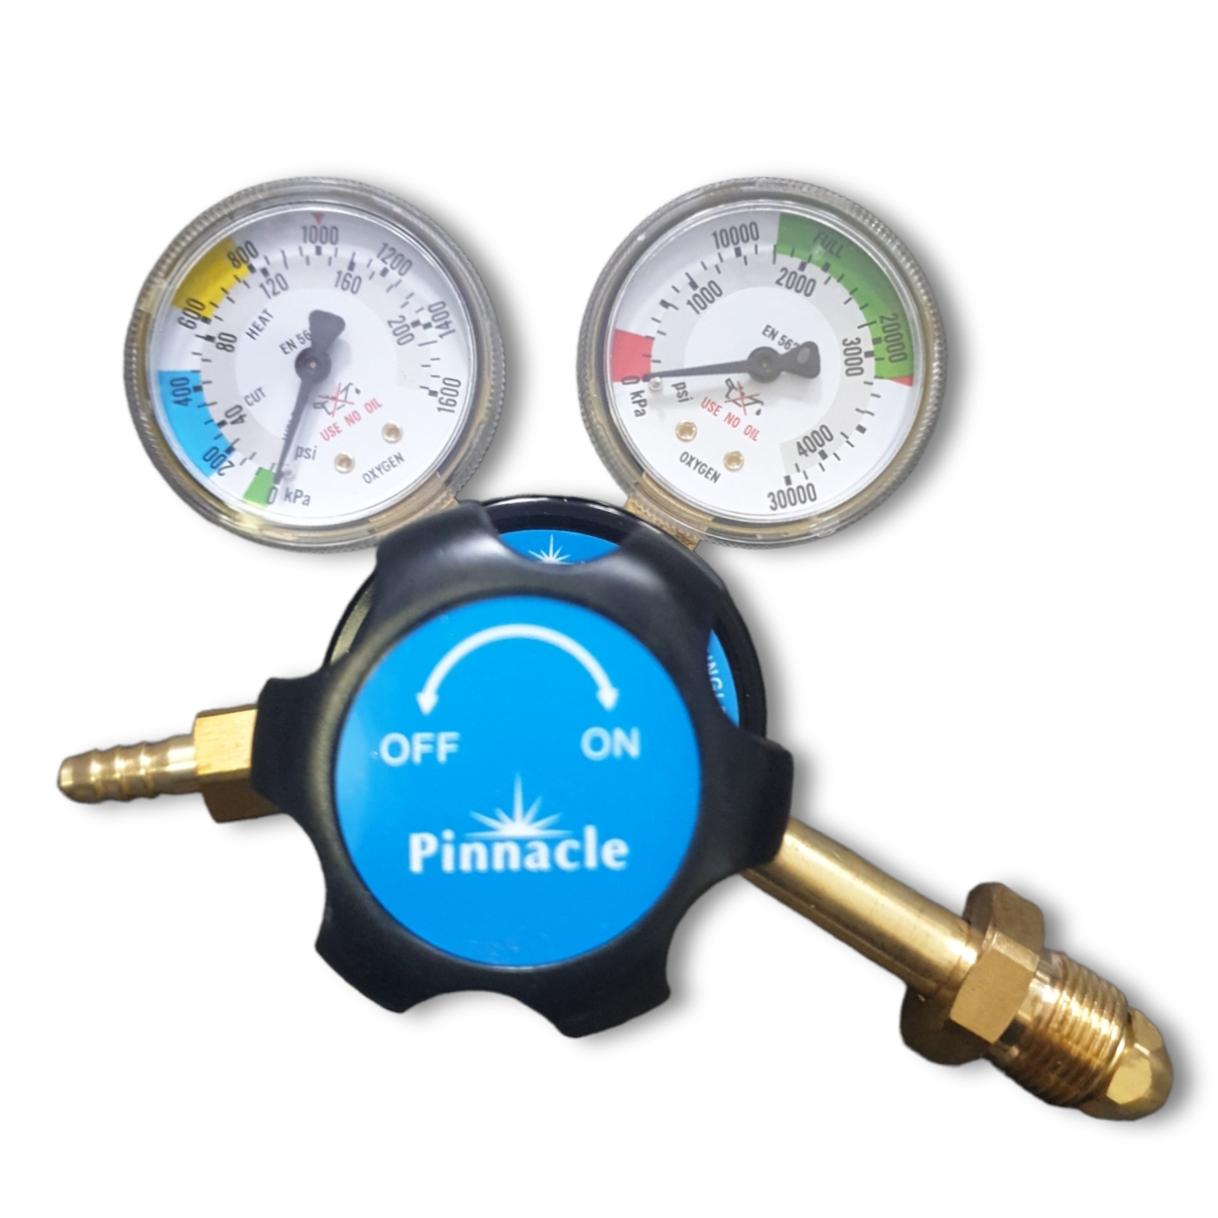 Pinnacle Oxygen Regulator - Precision Gas Control Tool